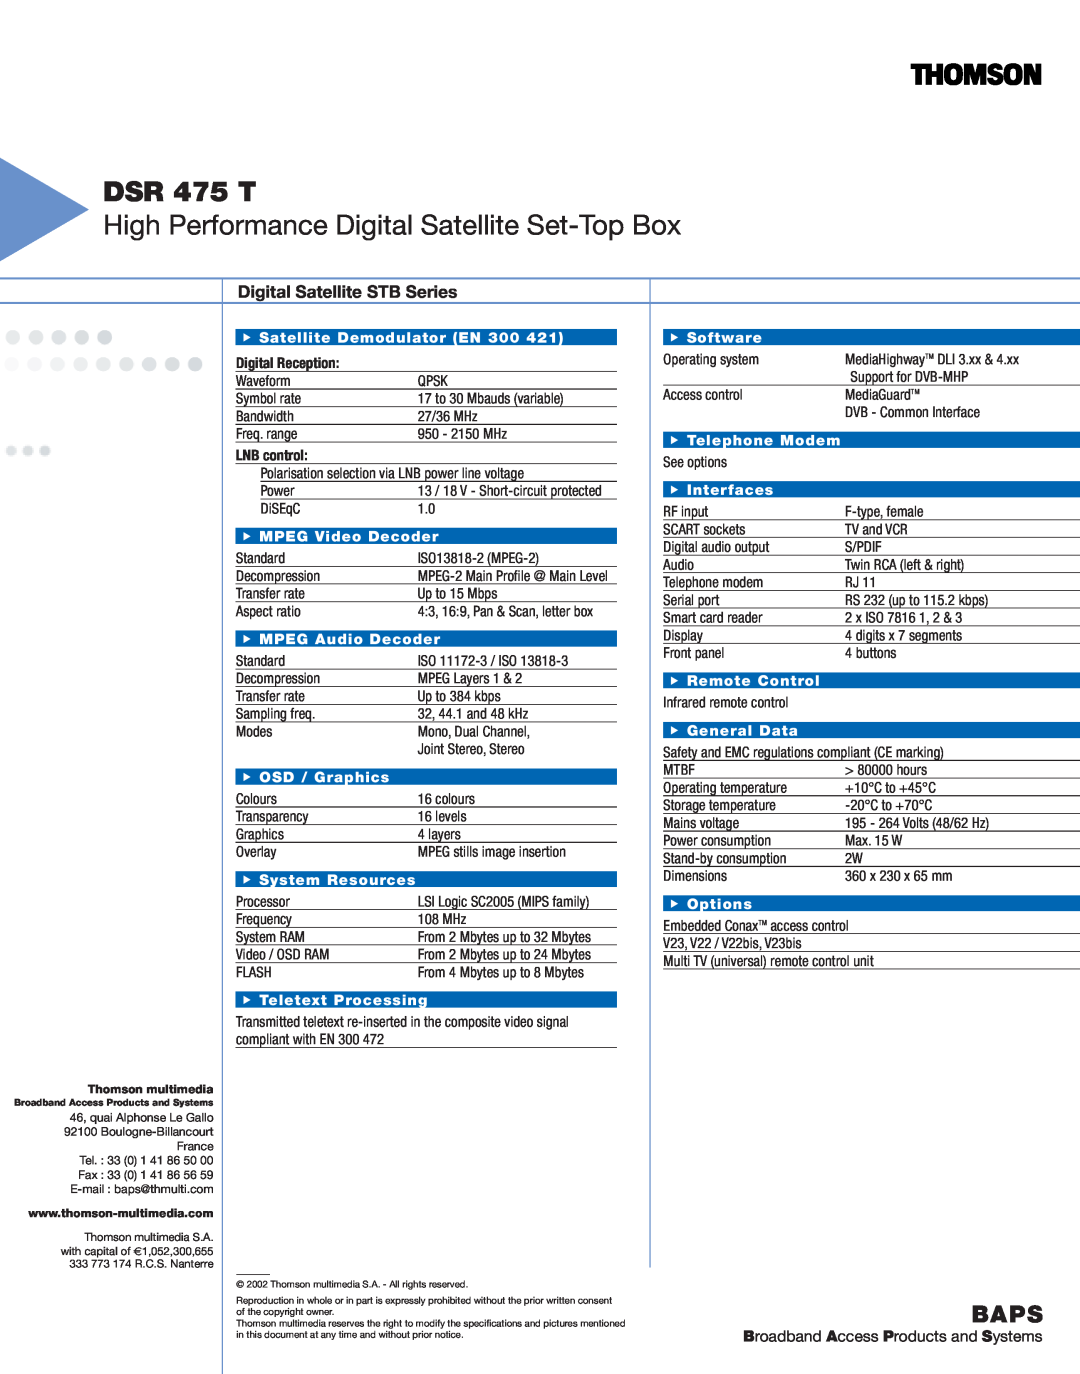 Technicolor - Thomson DSR 436 T DSR 475 T, High Performance Digital Satellite Set-Top Box, Digital Reception, Baps 